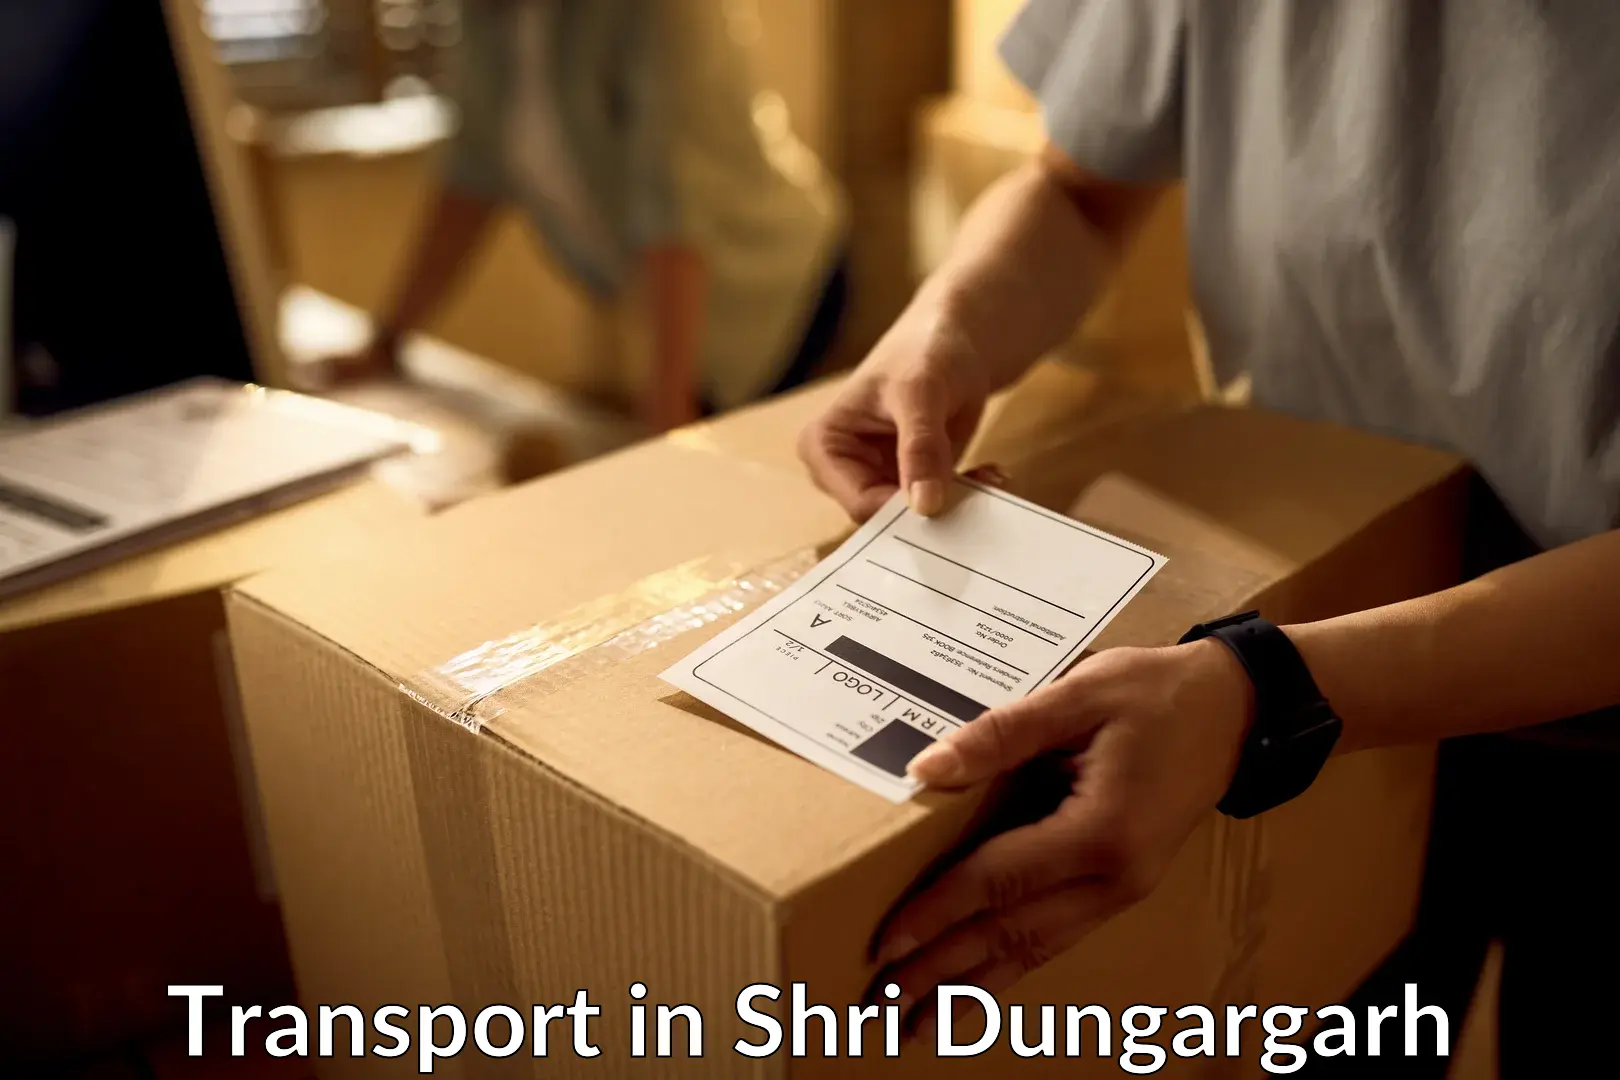 Air freight transport services in Shri Dungargarh